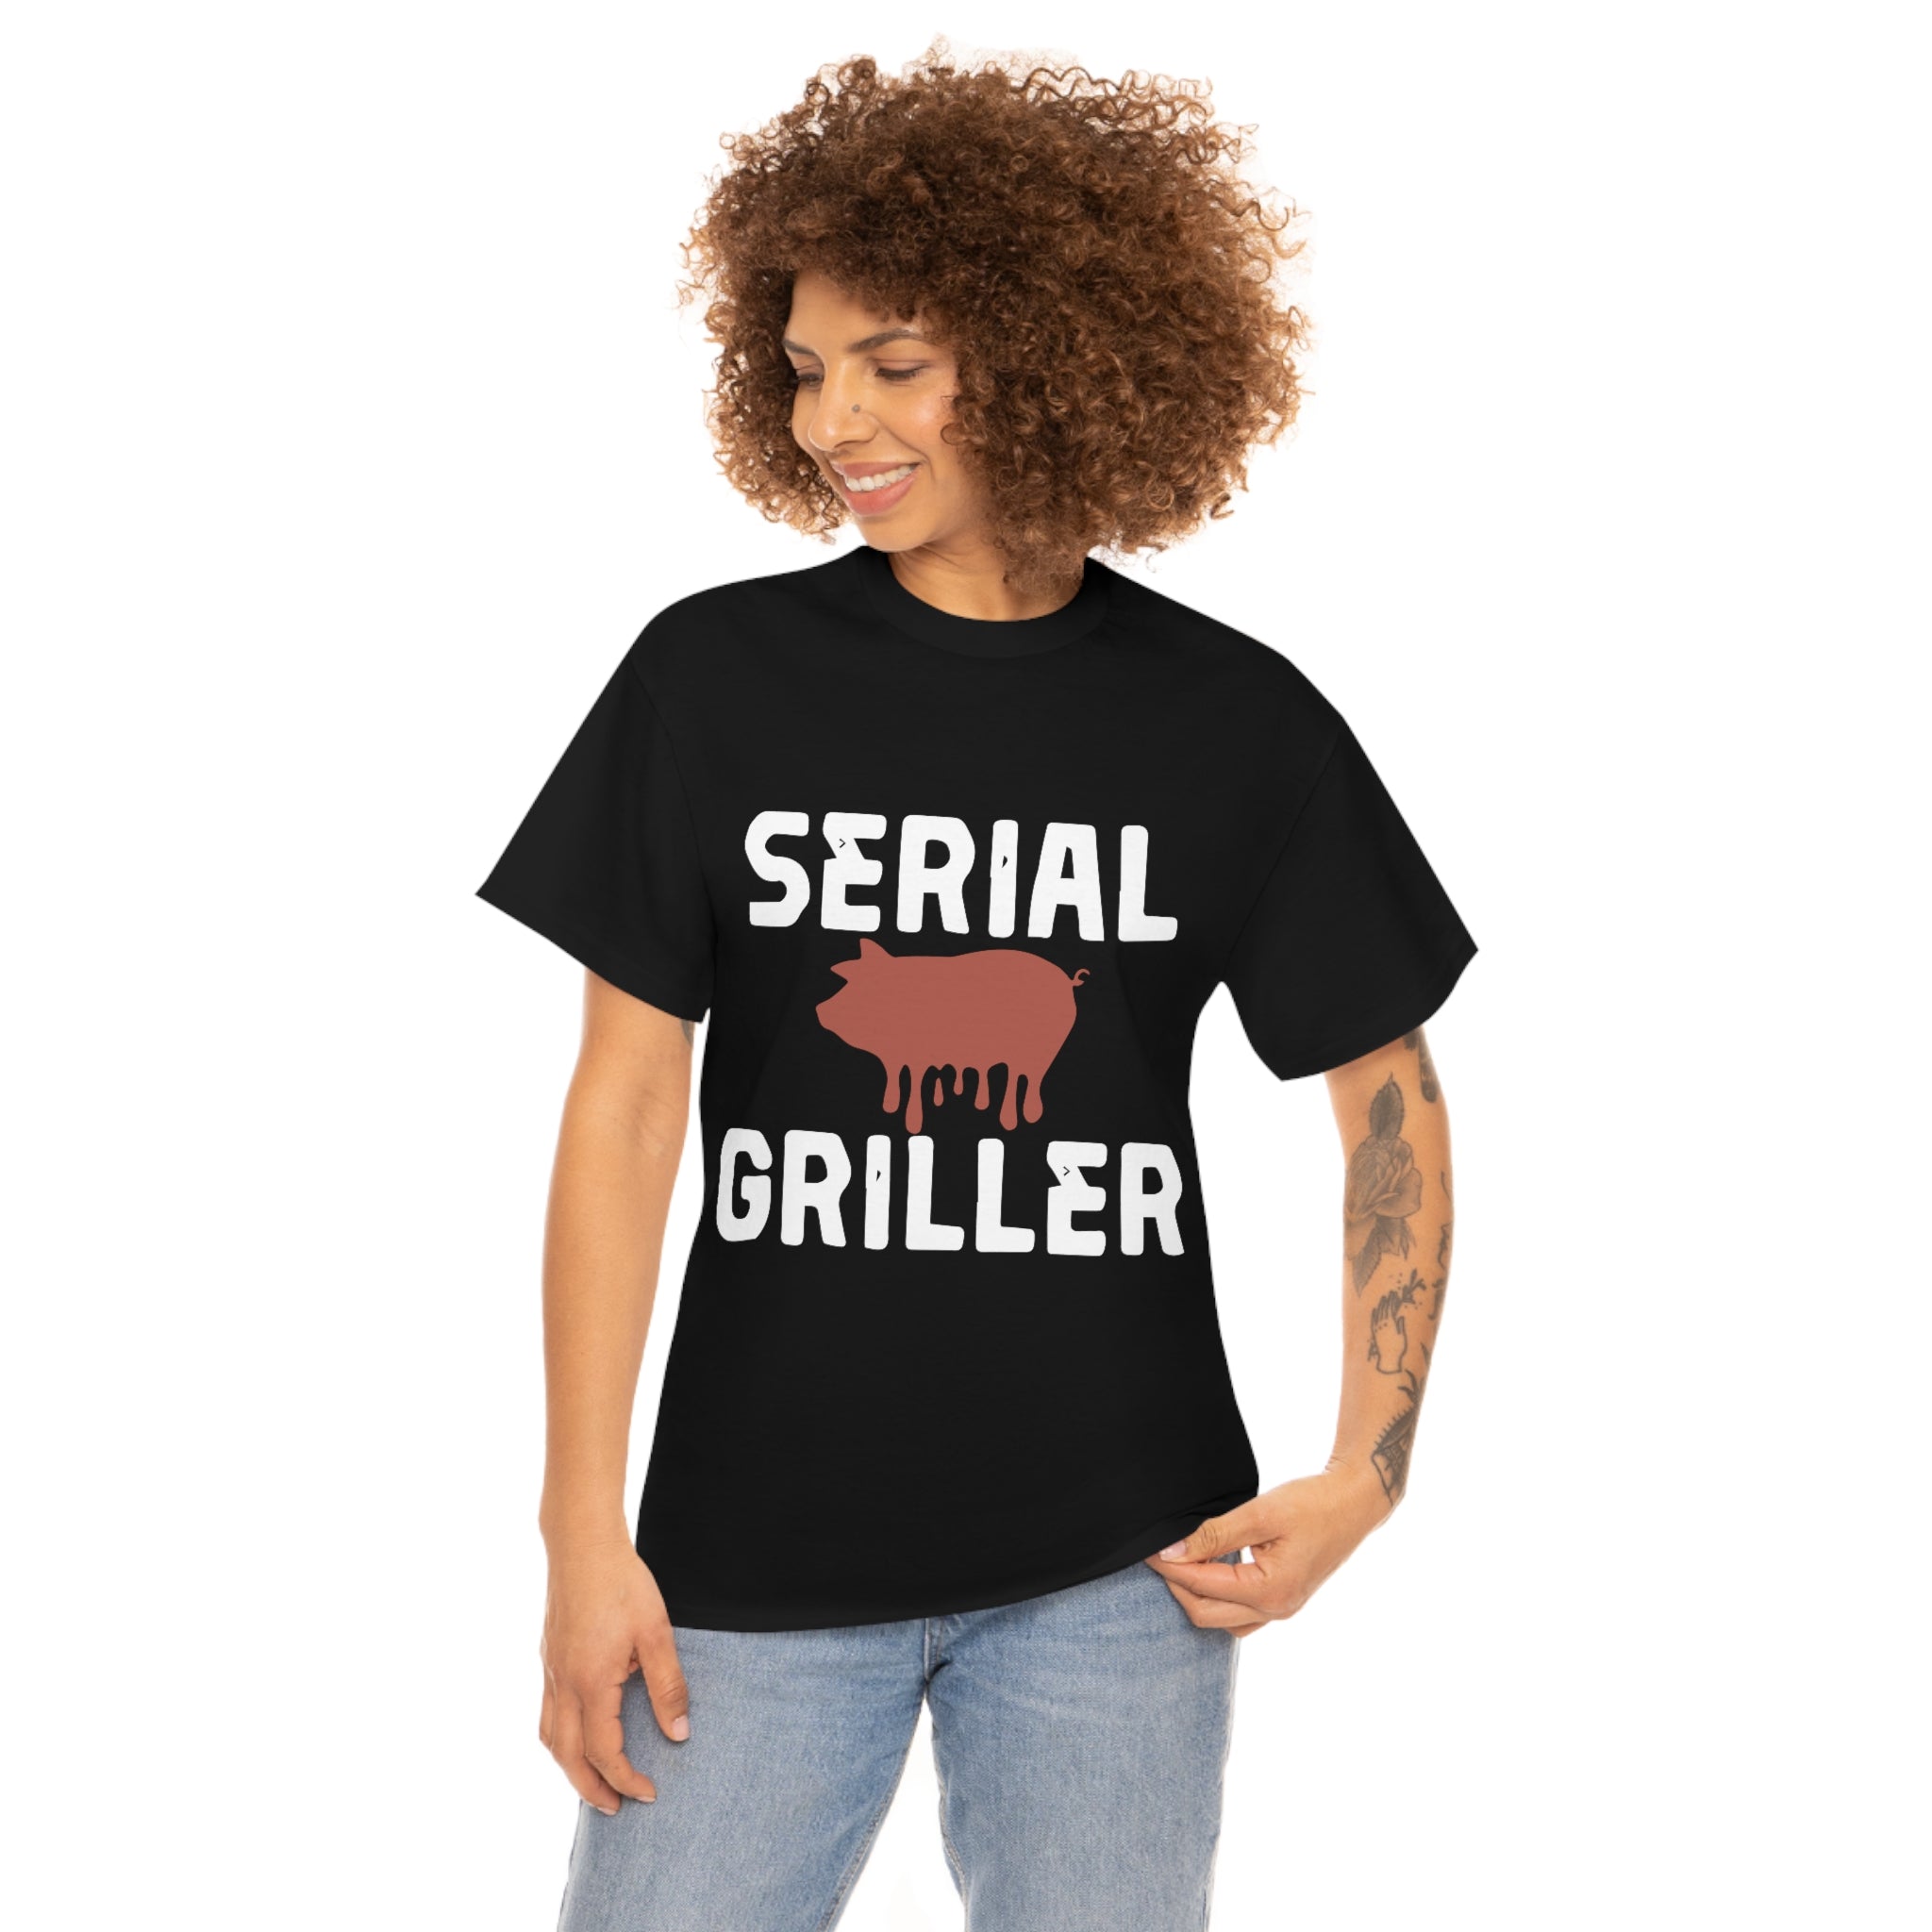 Serial Griller shirt